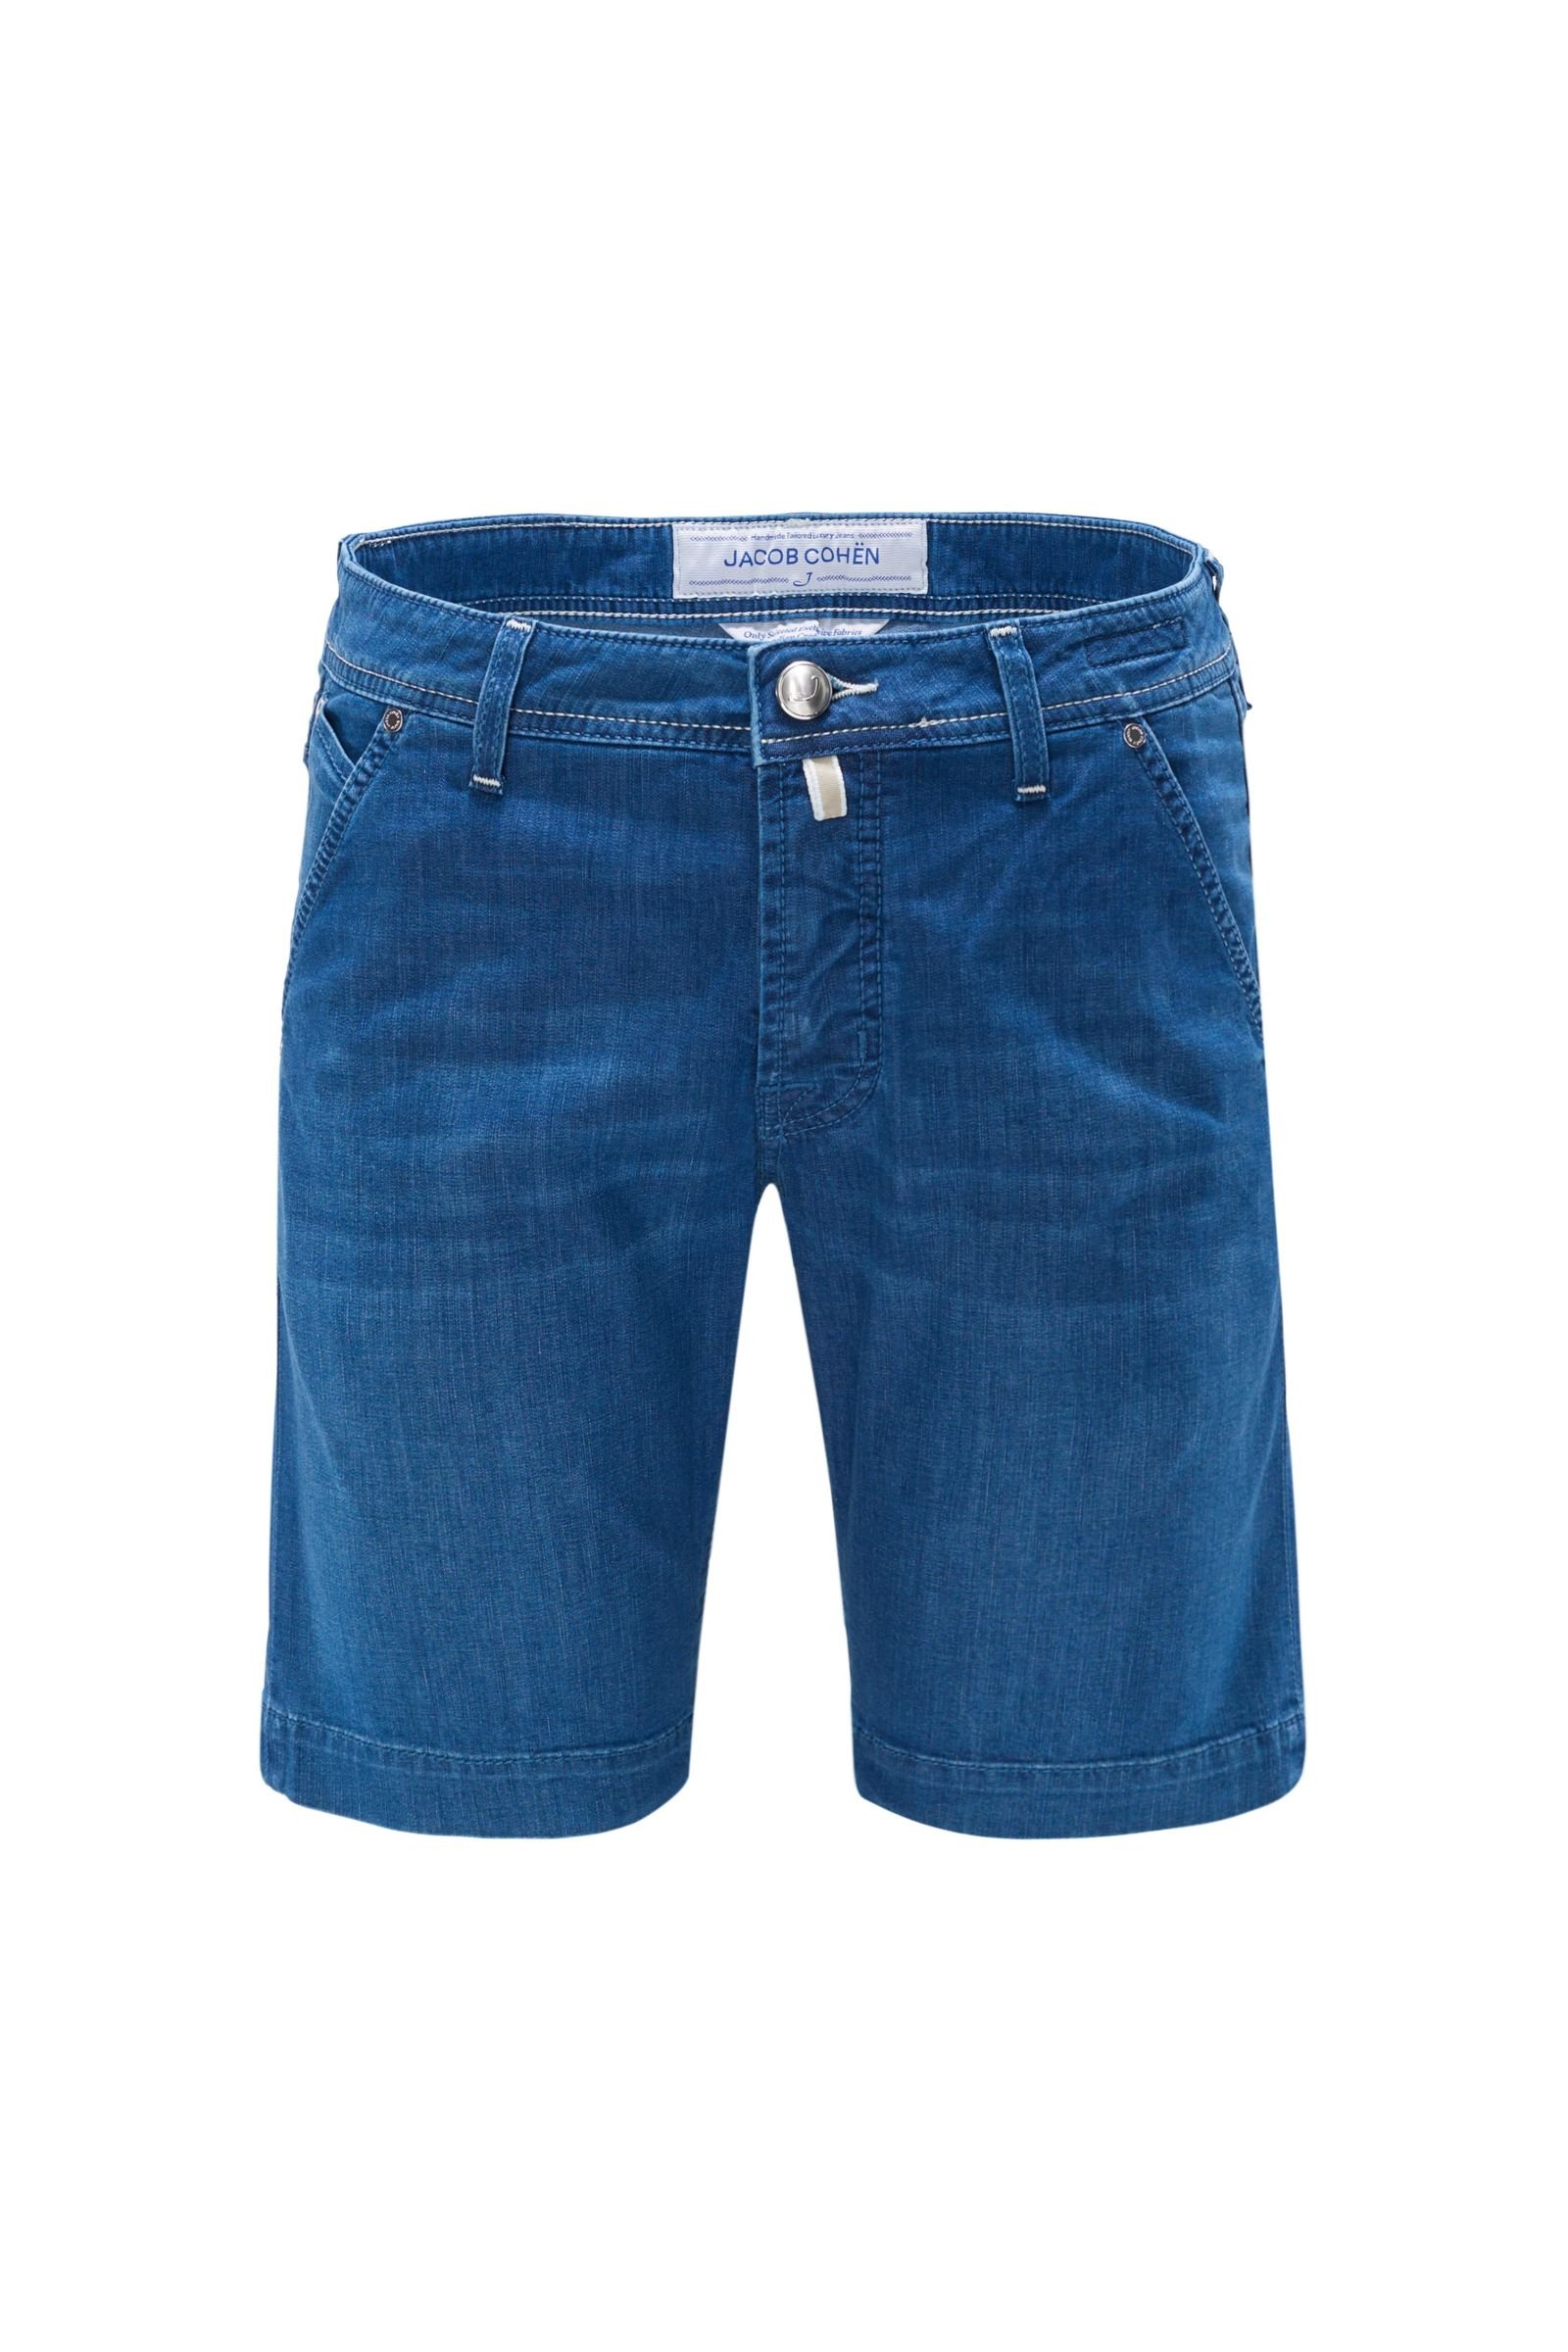 Denim Bermuda shorts 'J6613 Comfort Slim Fit' blue